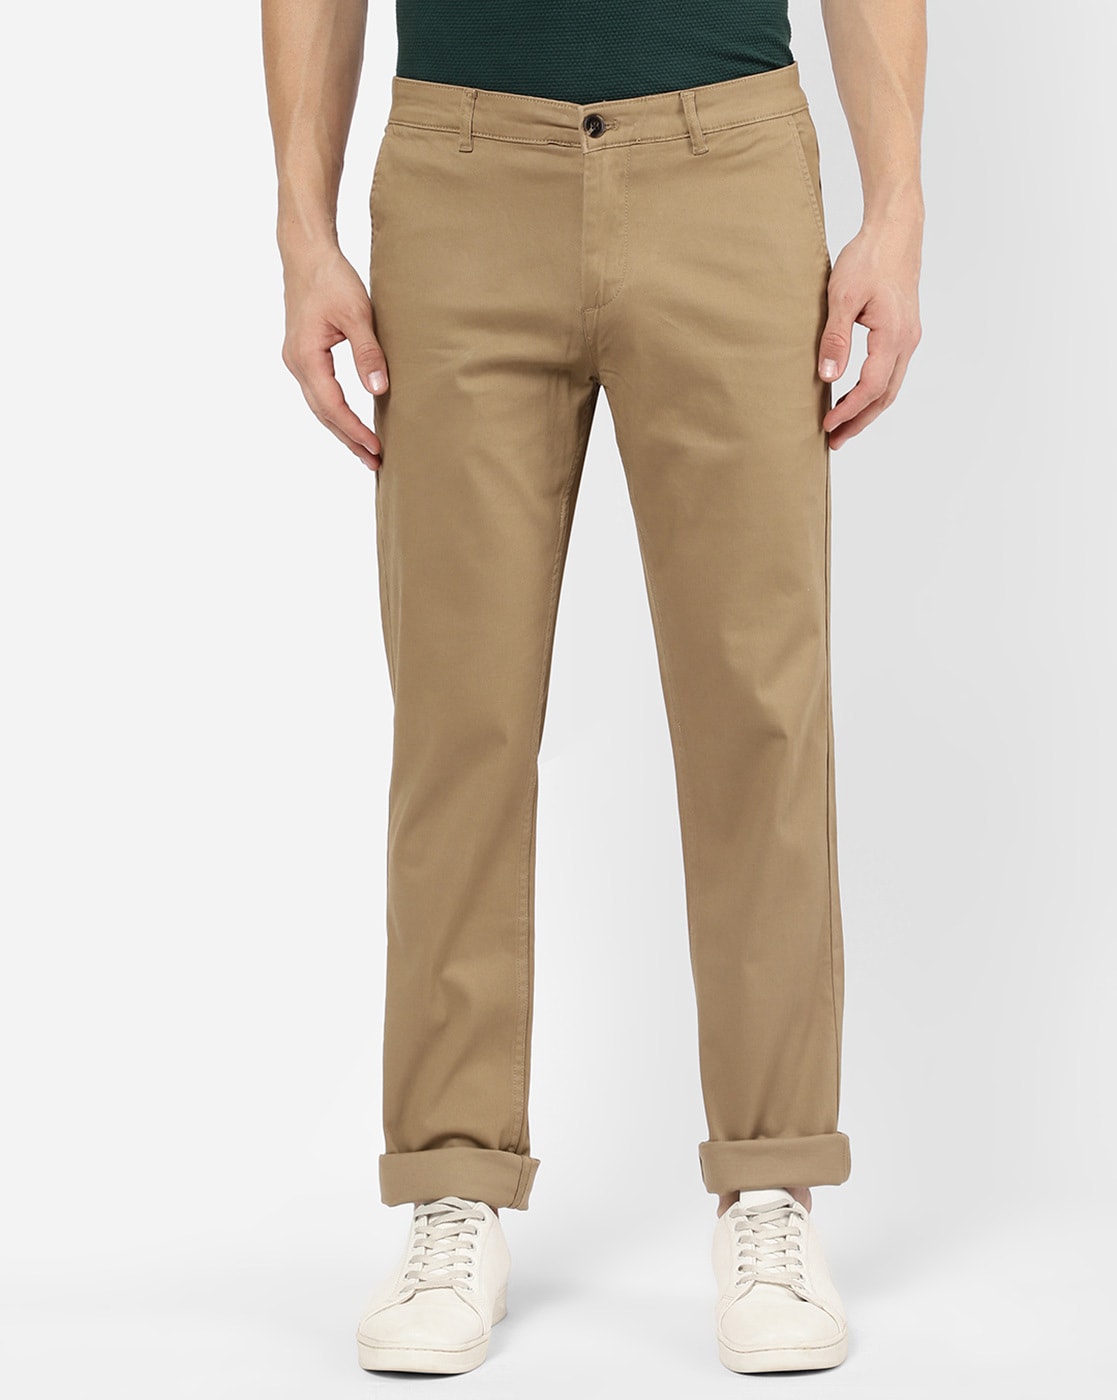 Buy Cream Trousers  Pants for Men by ADBUCKS Online  Ajiocom